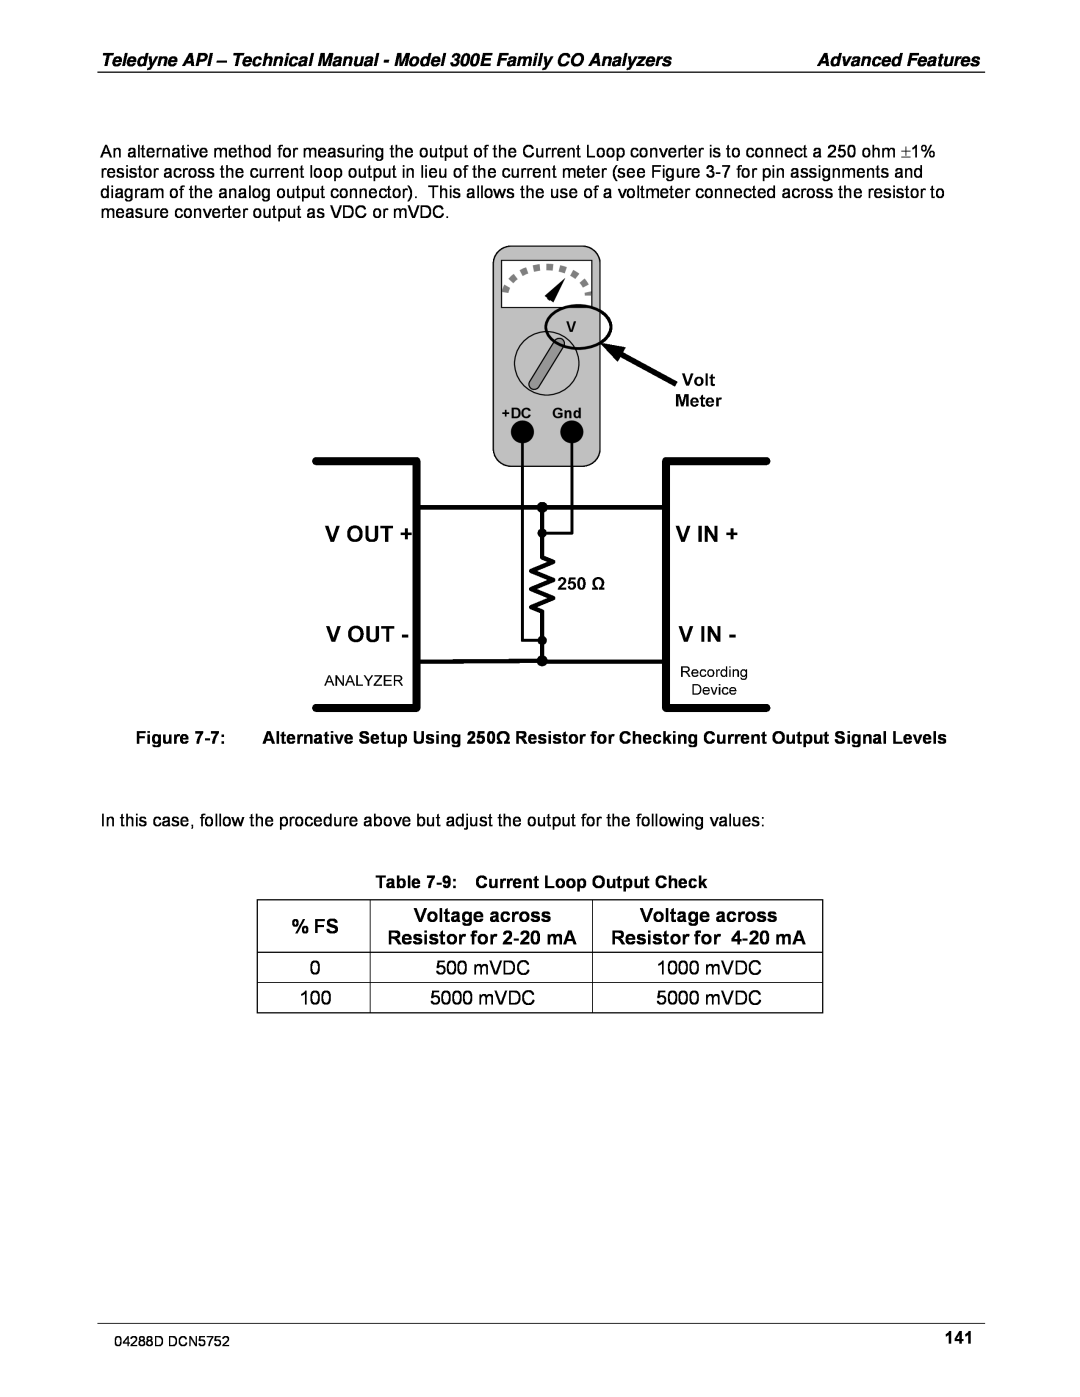 Teledyne M300EM operation manual Fs, Voltage across, Resistor for 2-20mA, Resistor for 4-20mA, mVDC 